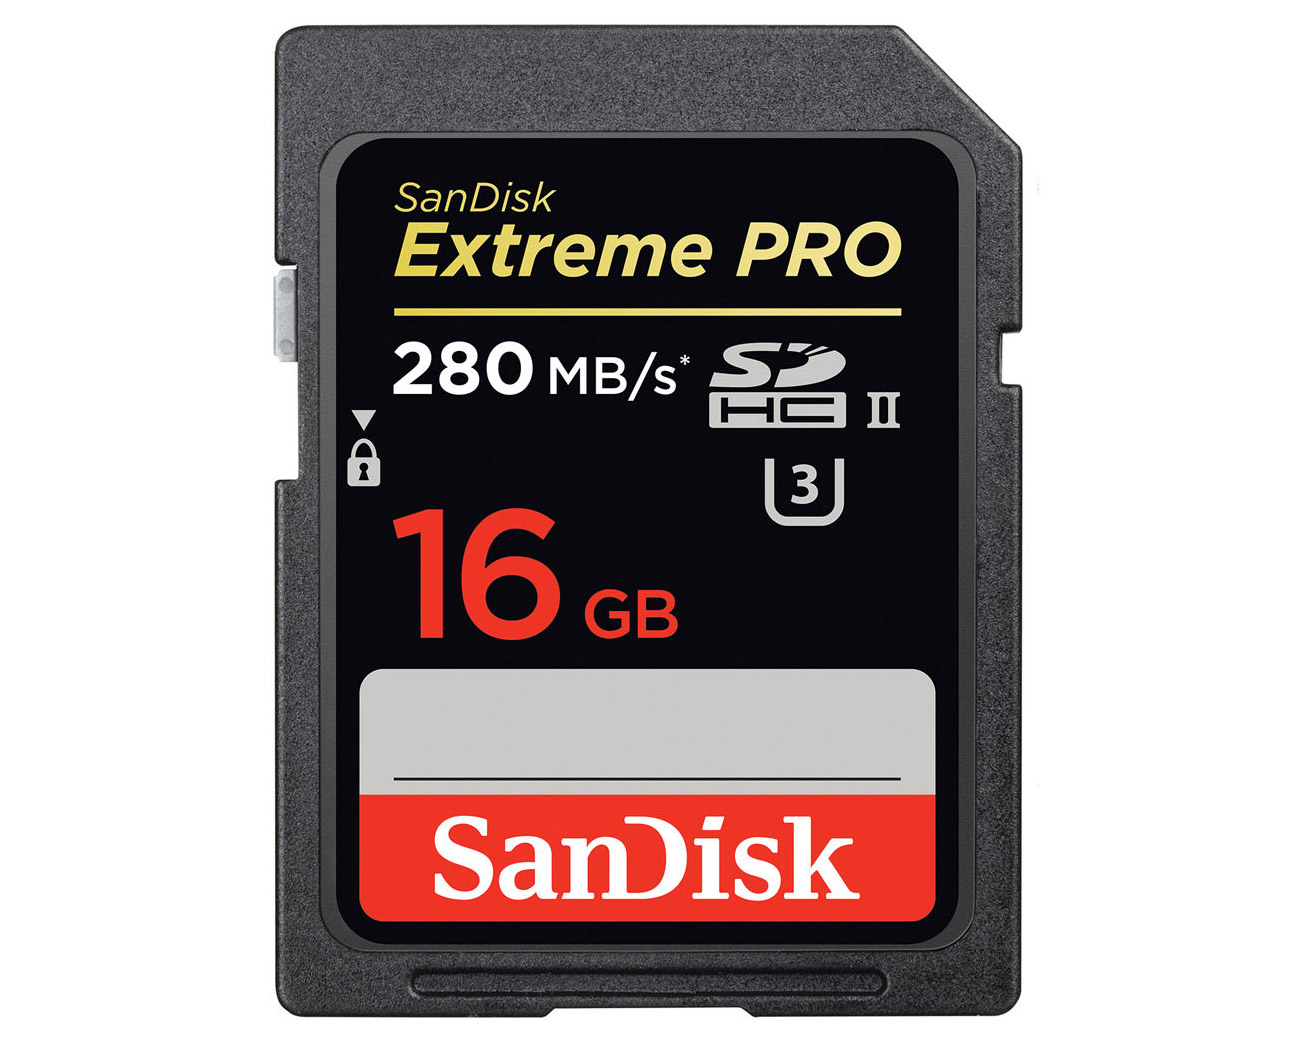 Sandisk Extreme Pro SDHC 16 GB (280 MB/s)